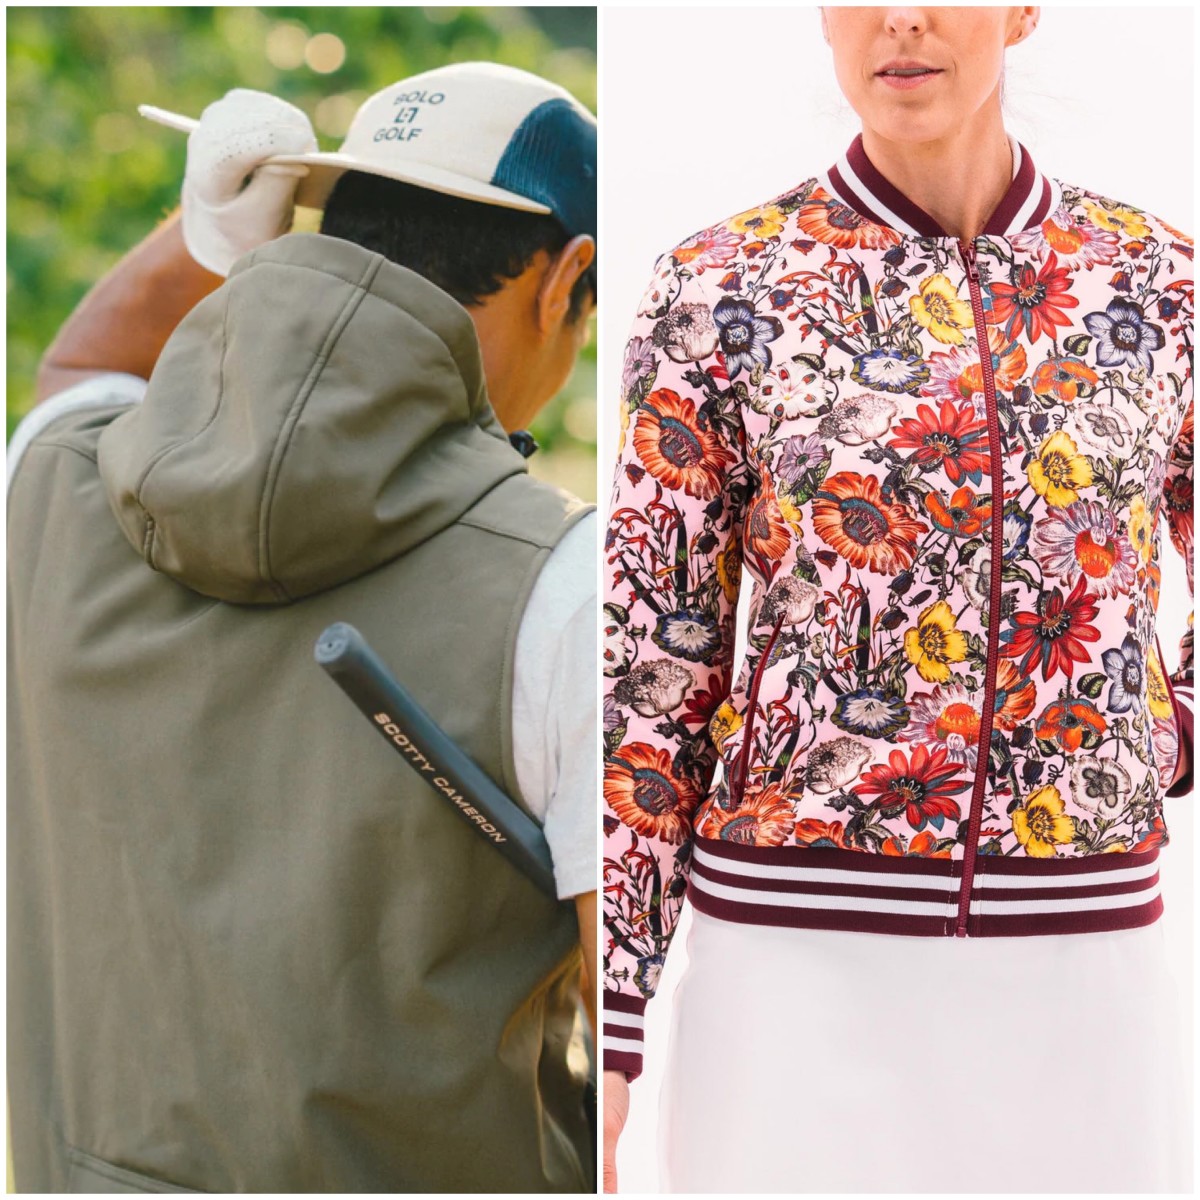 Summer golf apparel Solo vest & Foray jacket